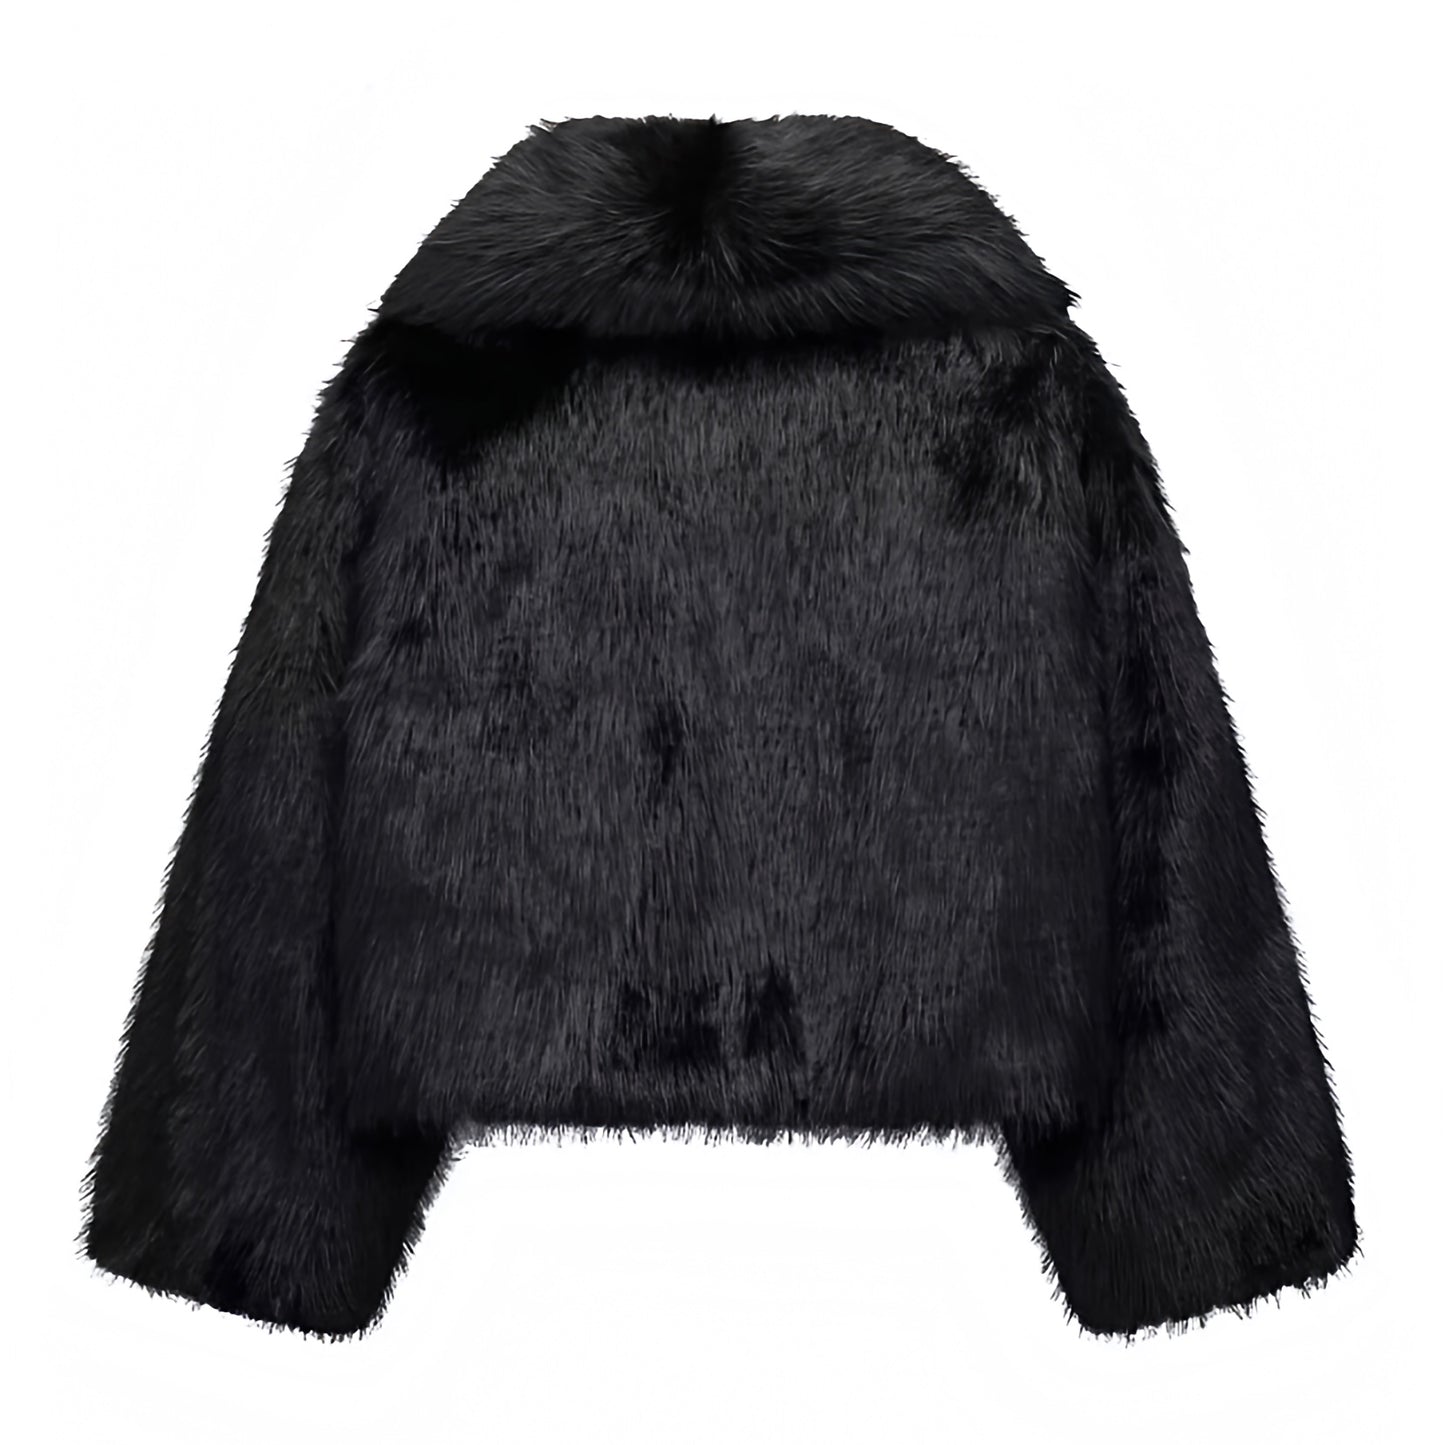 black-faux-fur-mink-shag-oversized-crop-coat-jacket-long-sleeve-chic-trendy-women-ladies-night-party-elegant-classy-club-wear-zara-revolve-aritzia